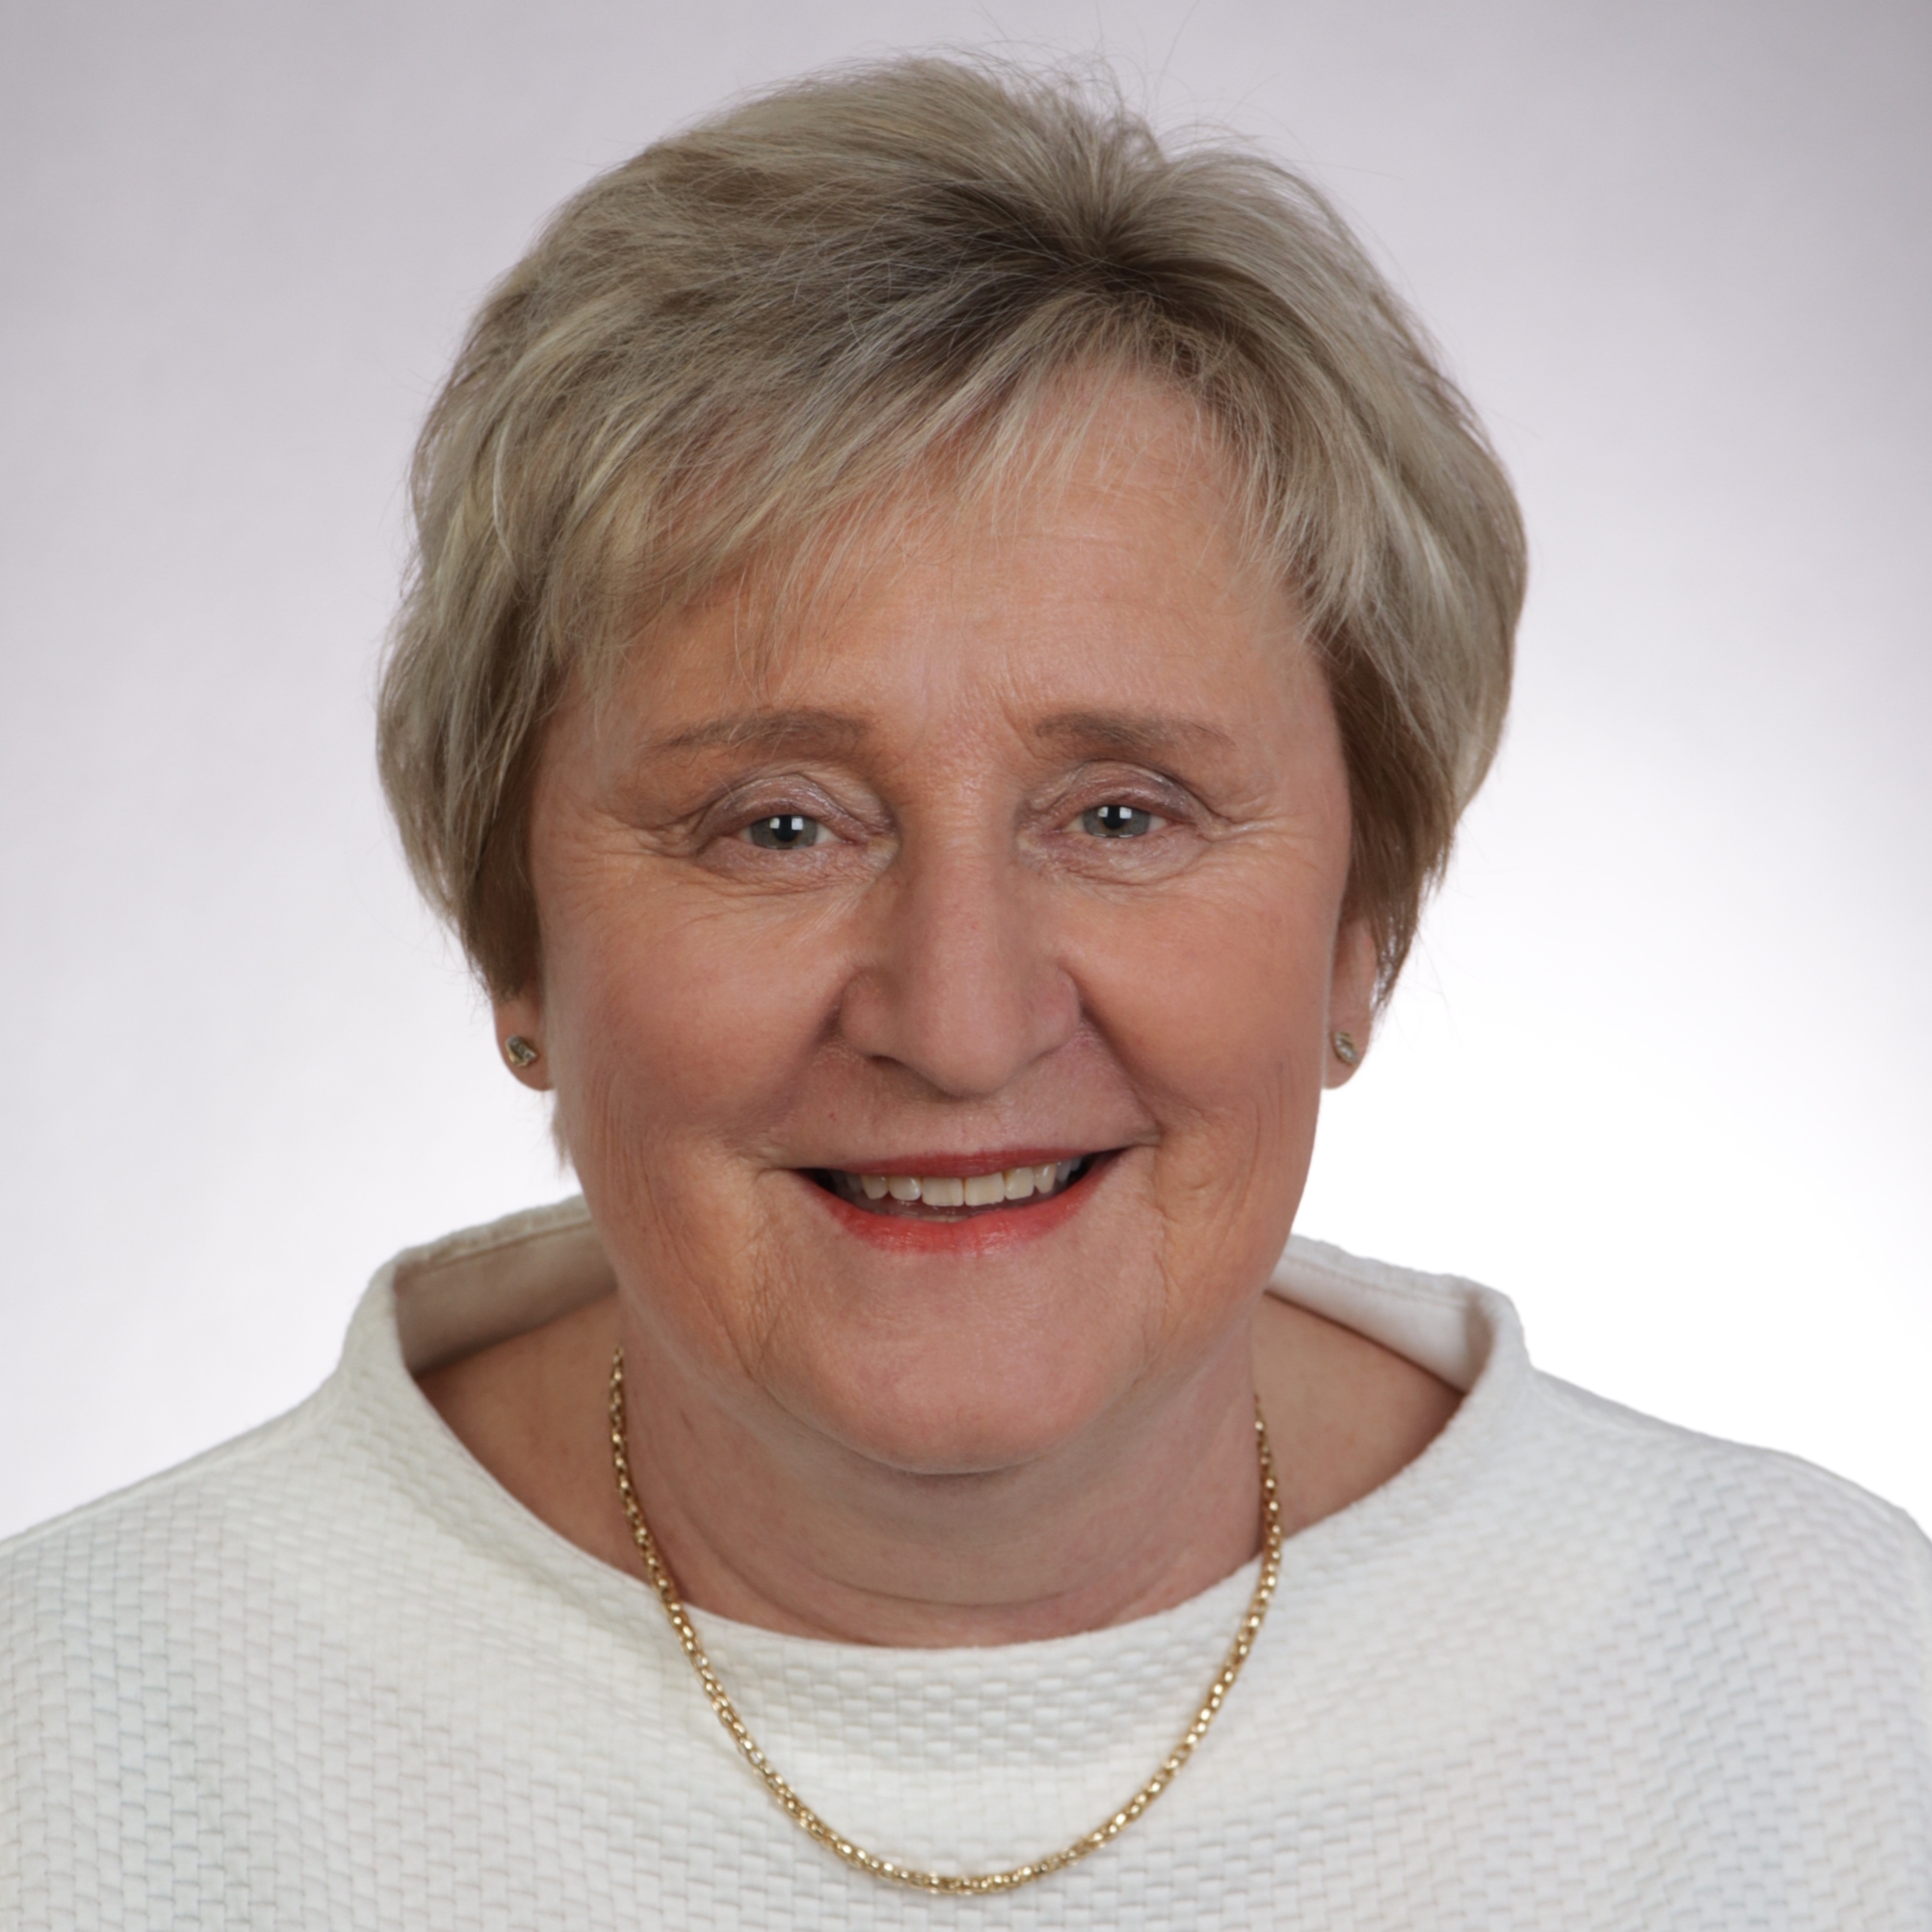 Porträt zeigt Präsidentin des Landesarbeitsgerichts Baden-Württemberg Dr. Betina Rieker